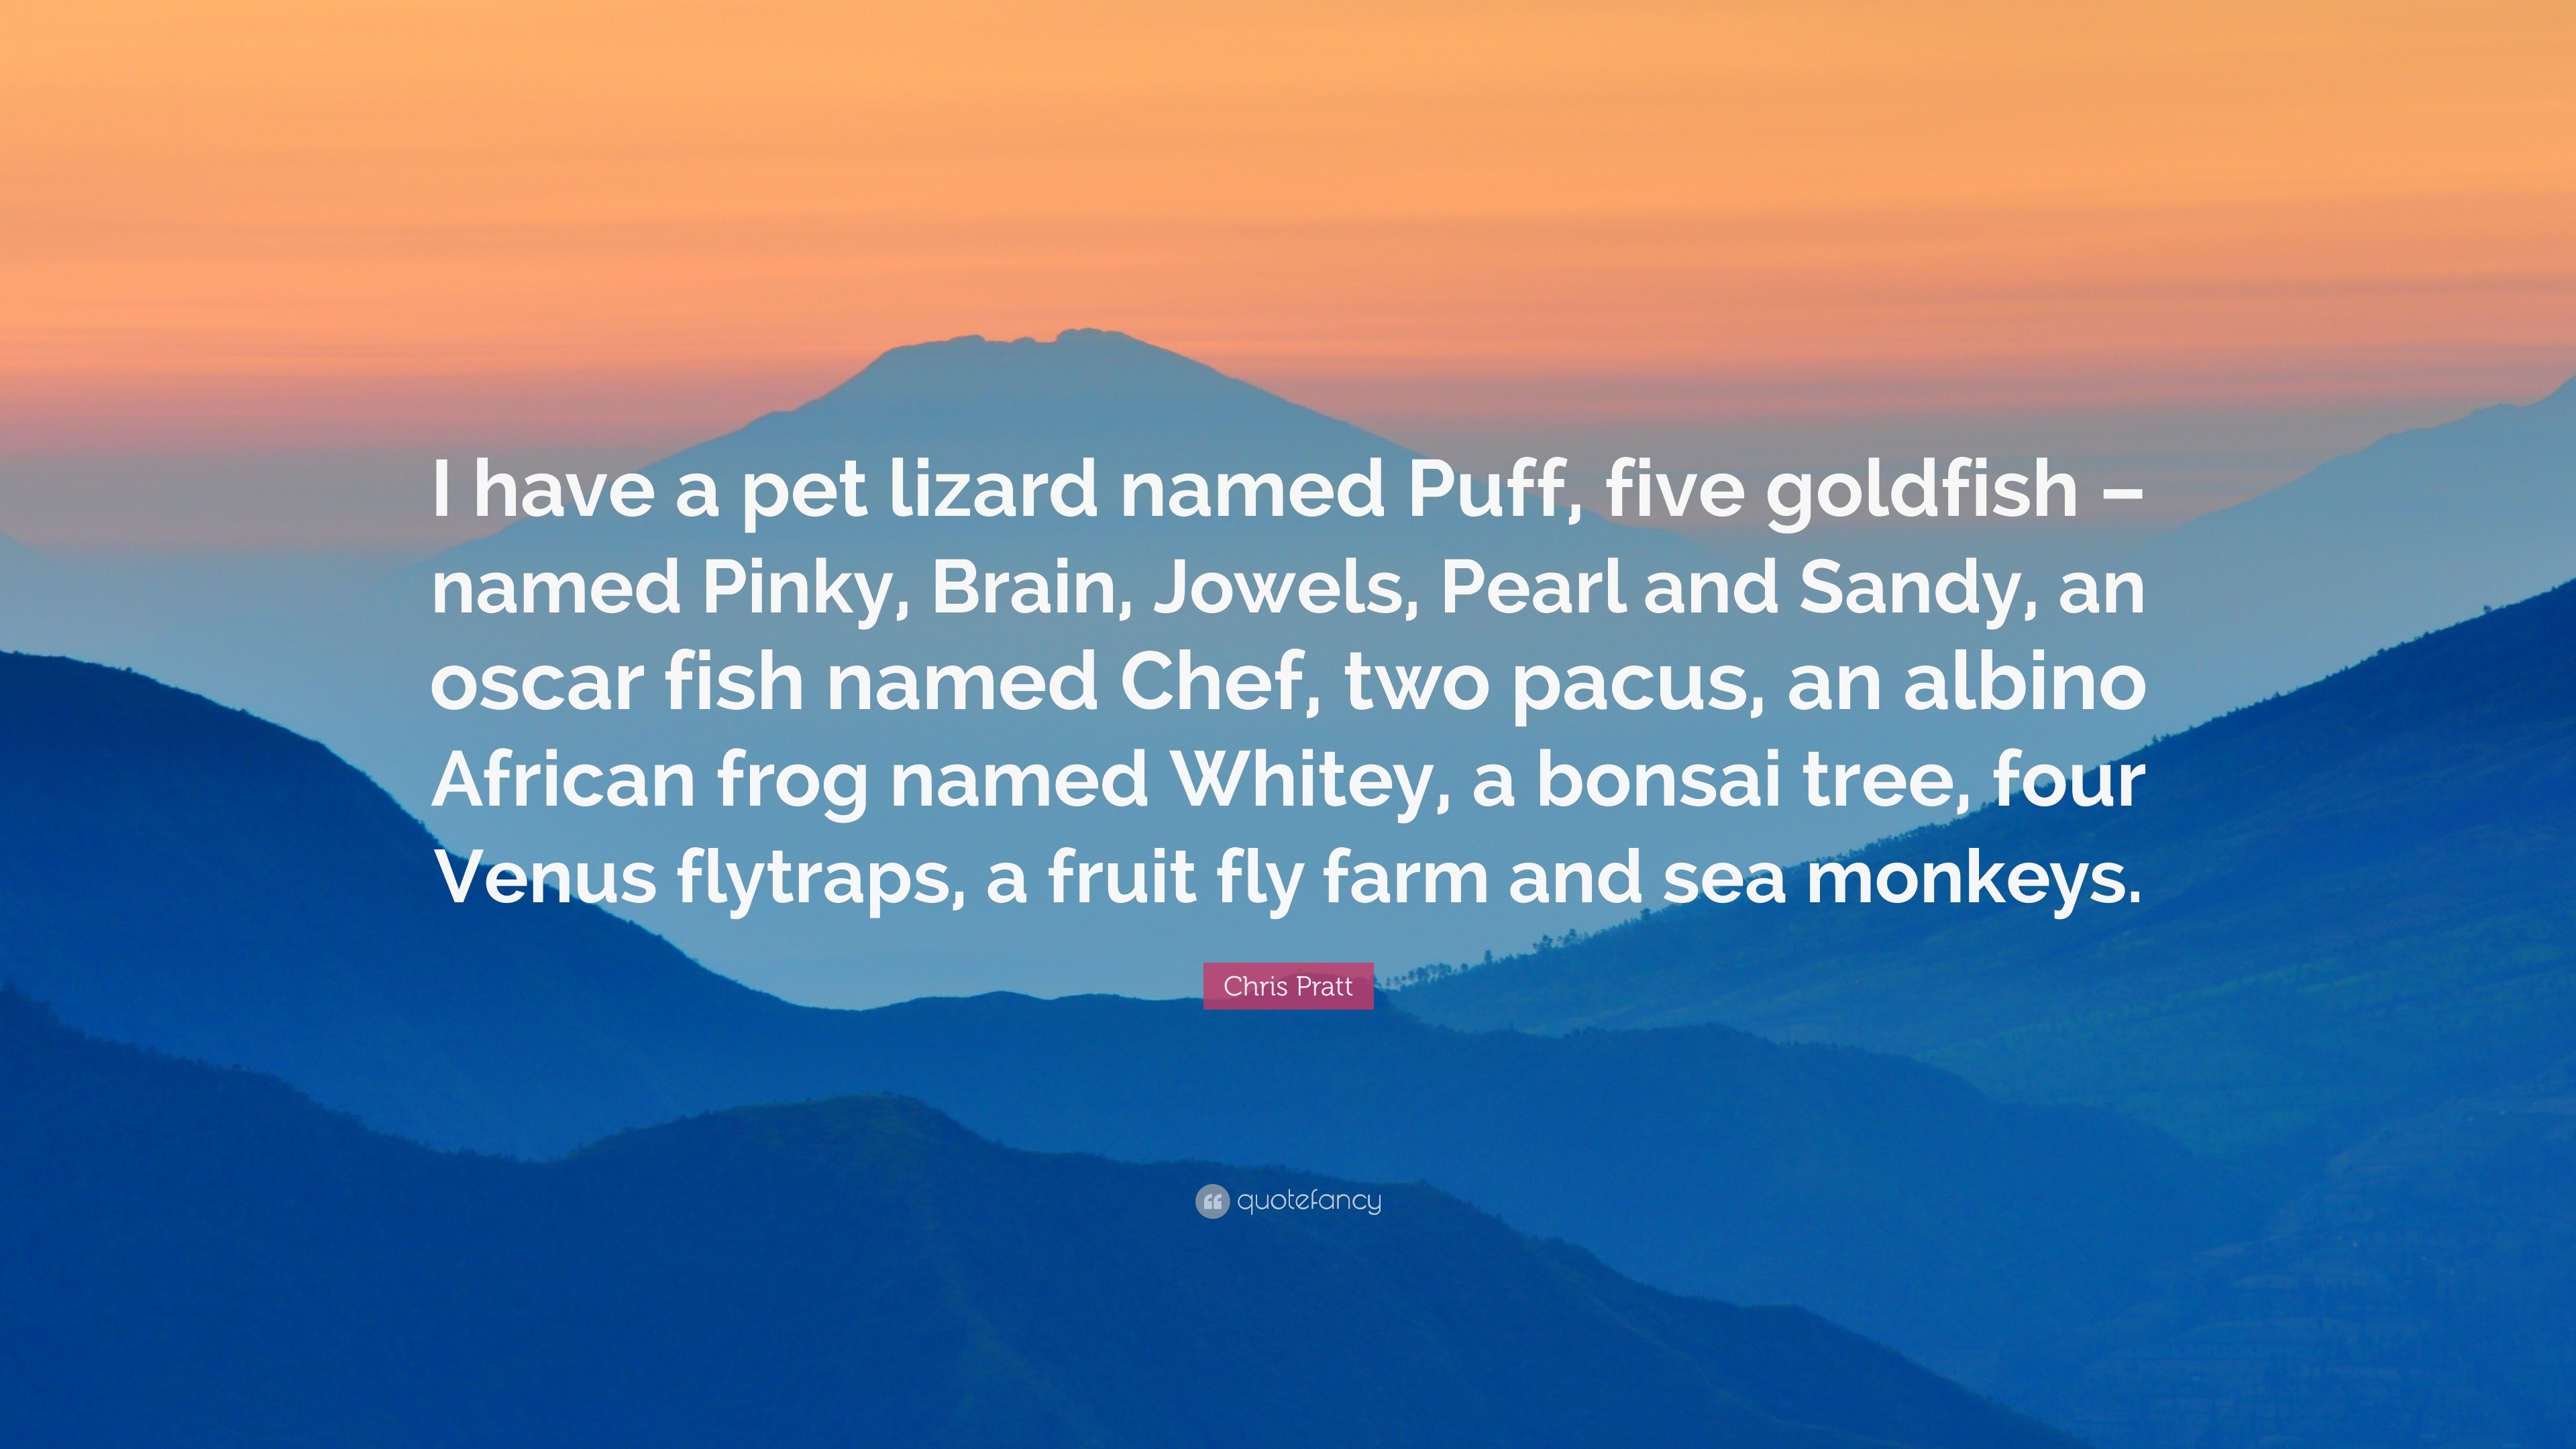 3840x2160 Chris Pratt Quote: “I have a pet lizard named Puff, five goldfish –